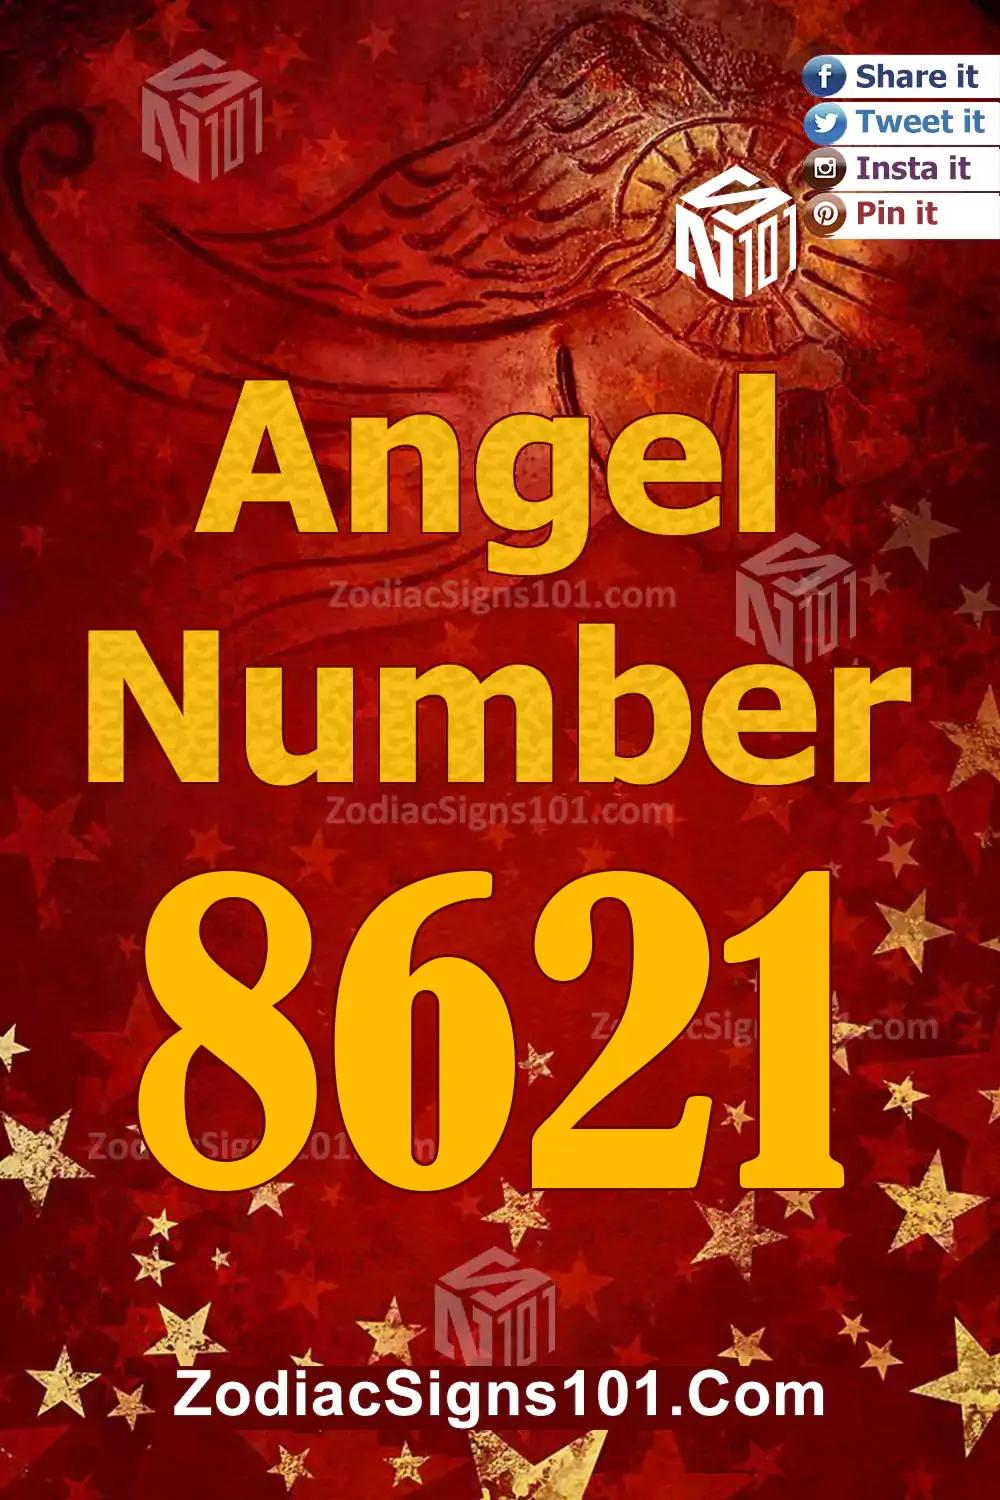 8621-Angel-Number-Meaning.jpg